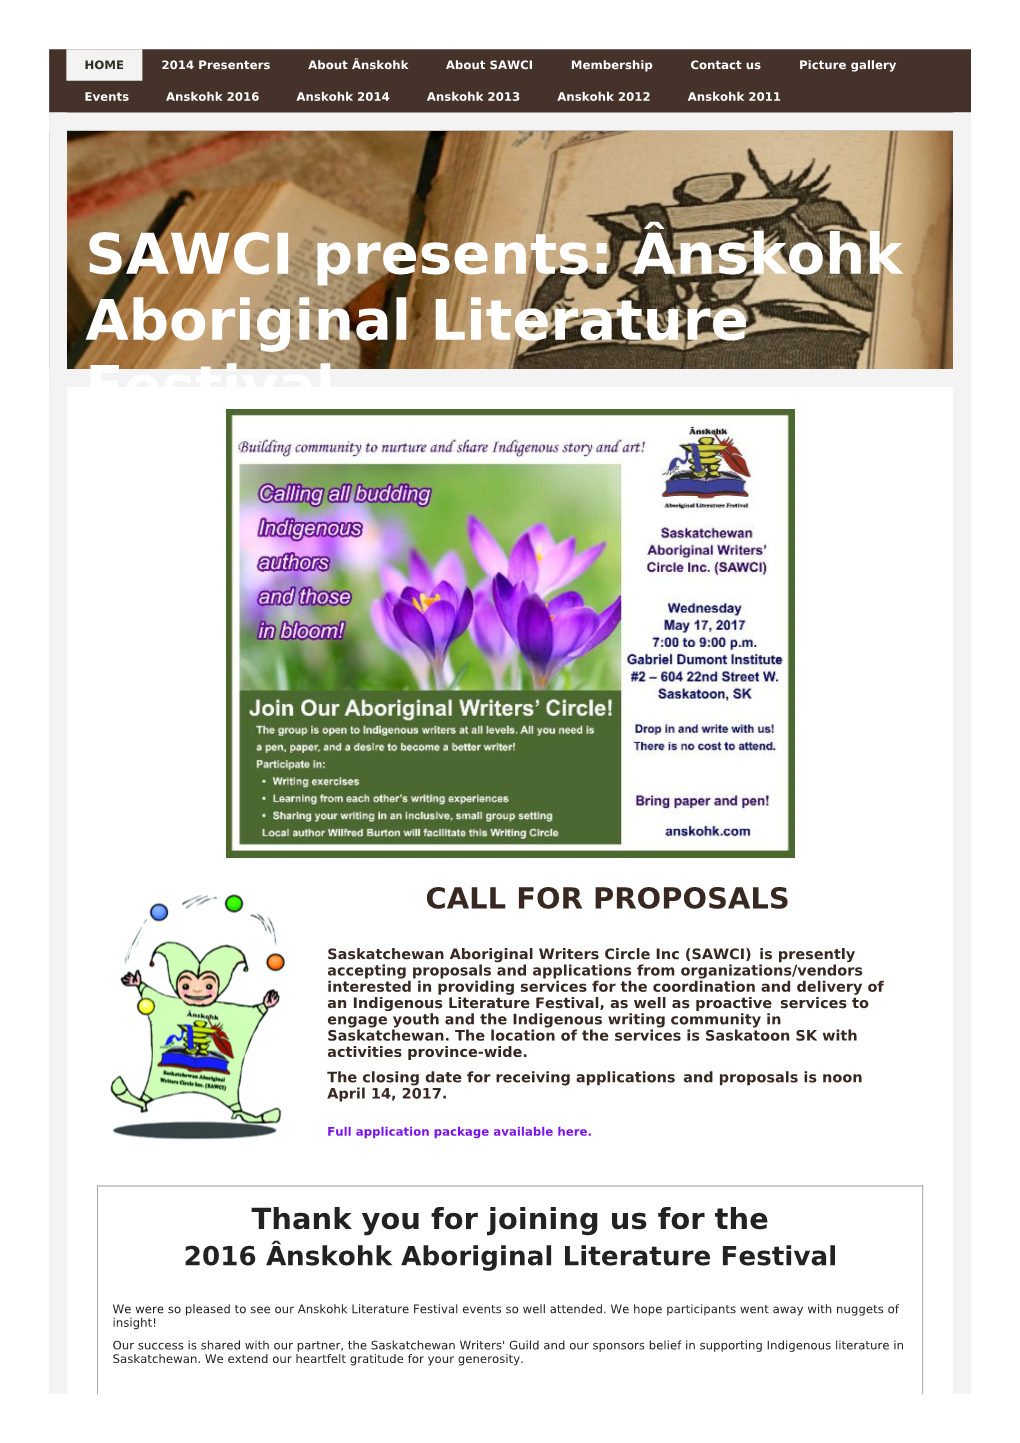 SAWCI Presents: Ânskohk Aboriginal Literature Festival